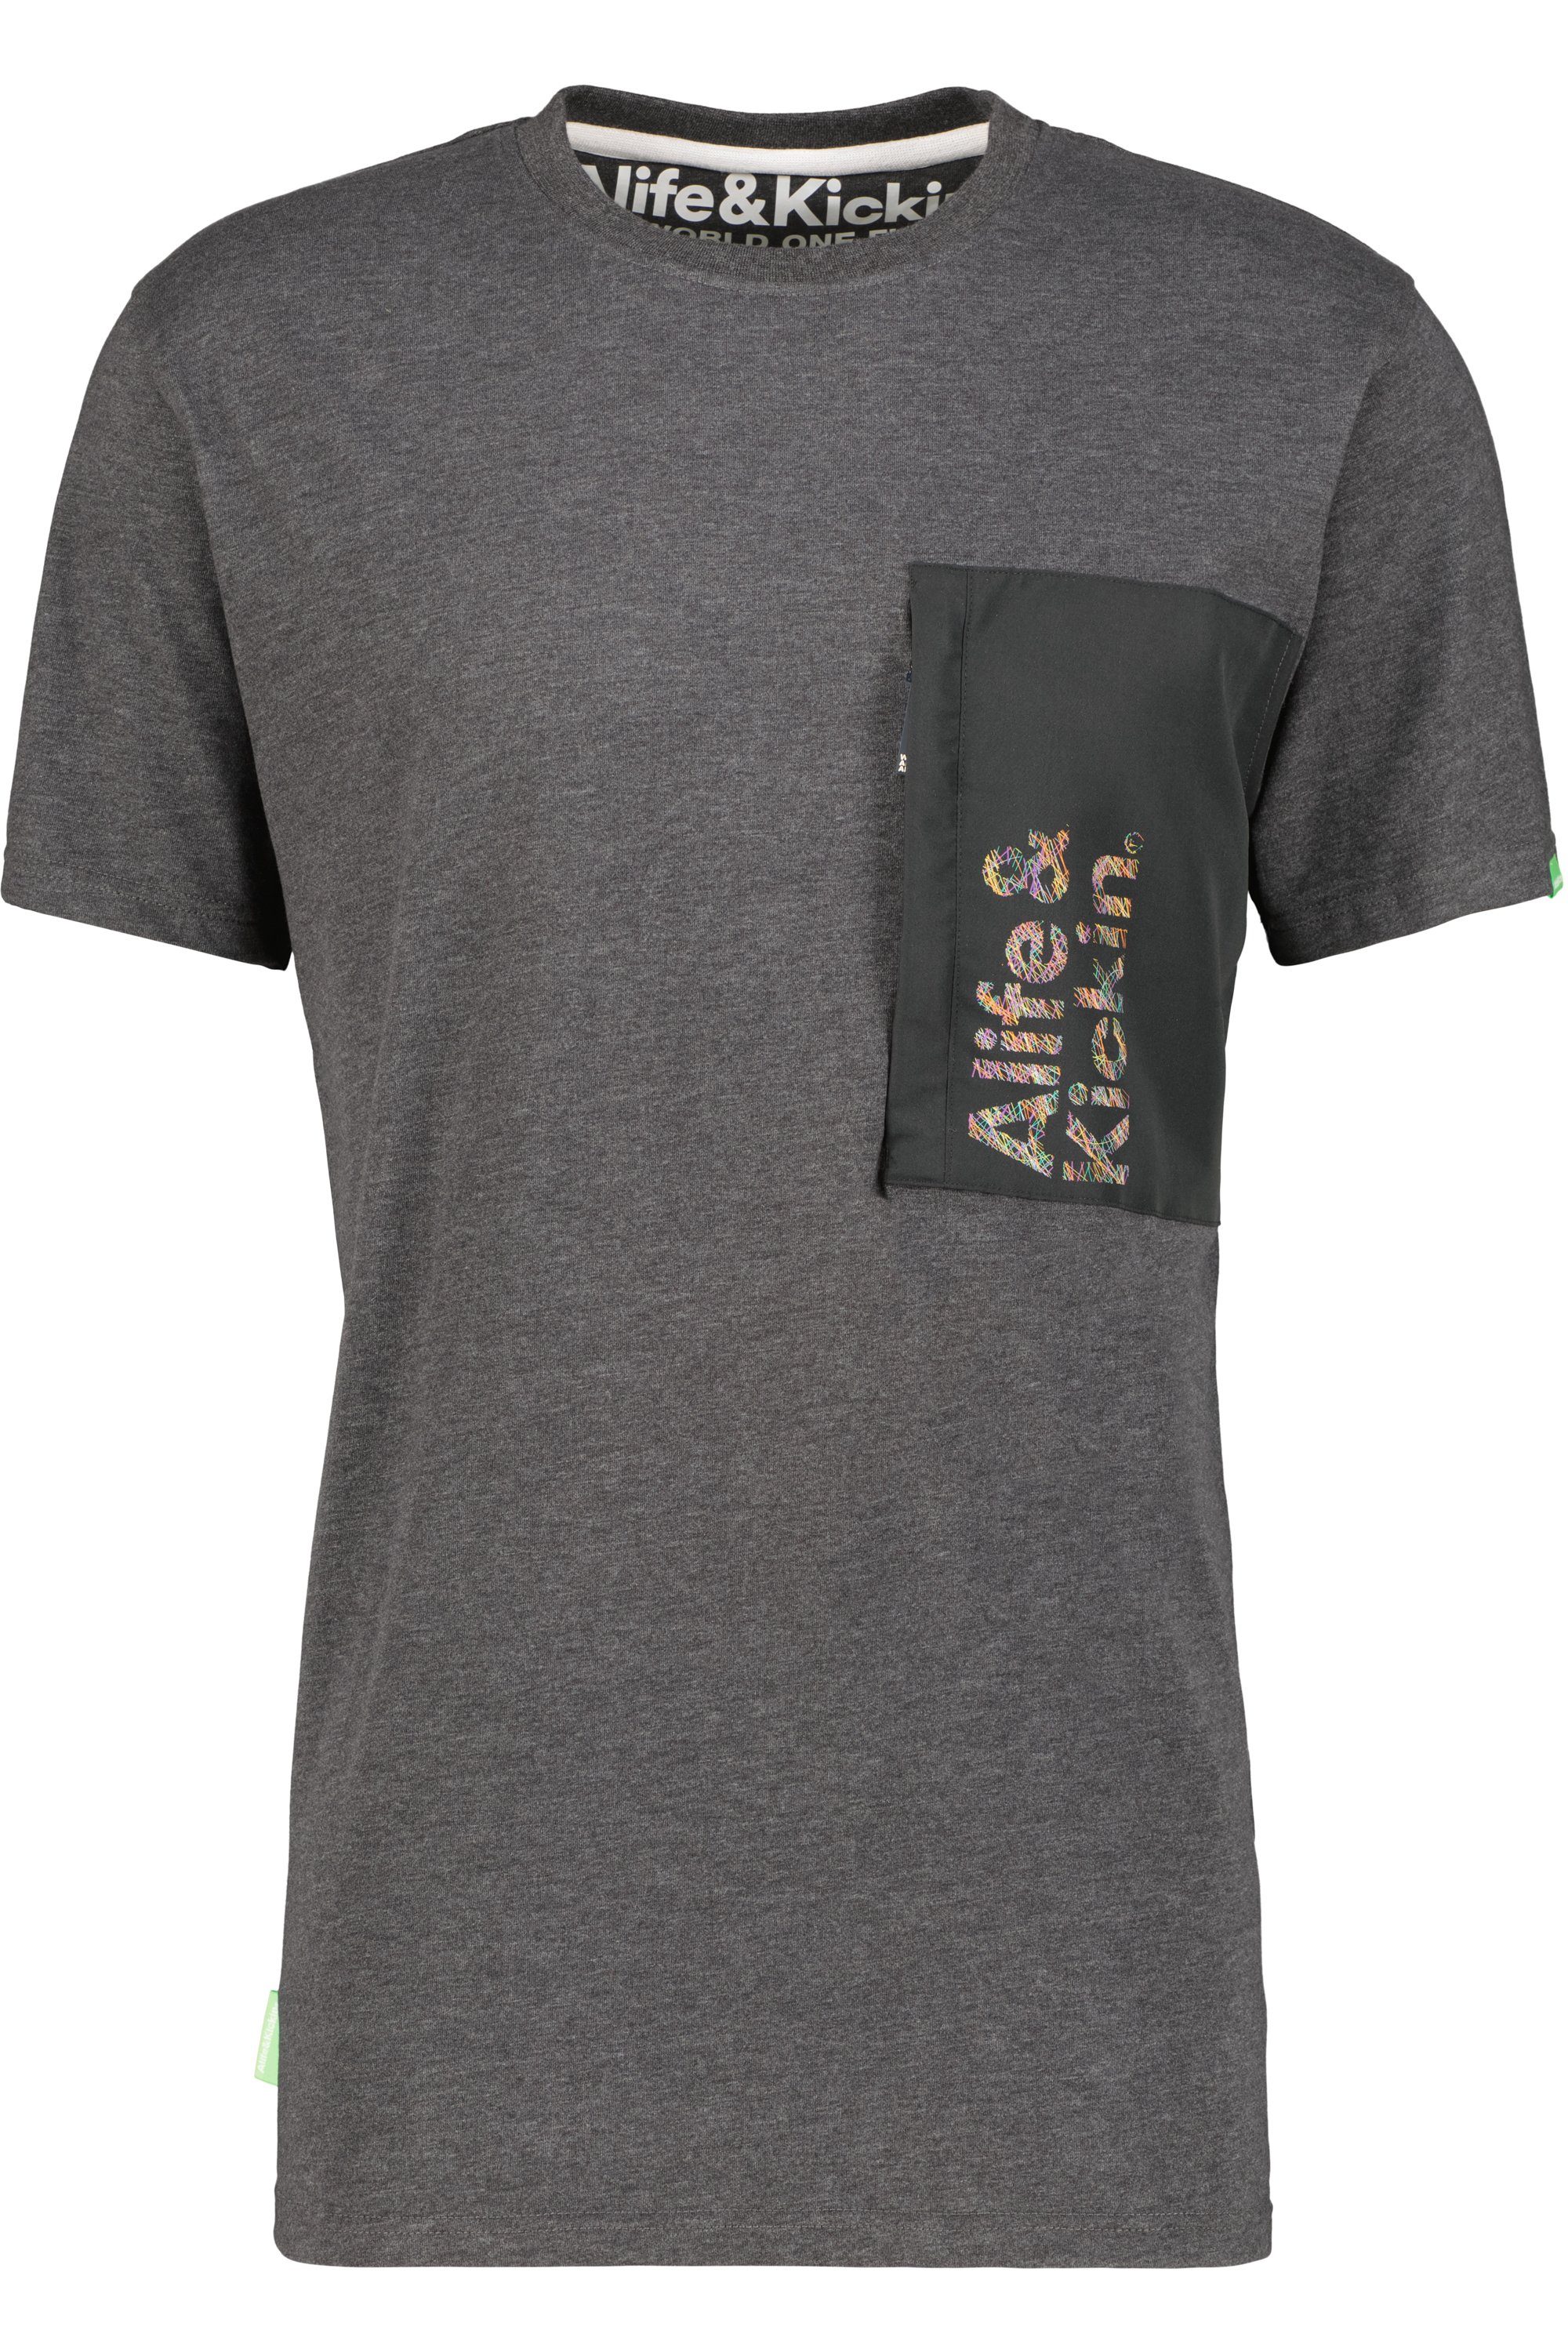 Alife & Kickin T-Shirt Herren Shirt moonless T-Shirt RossAK